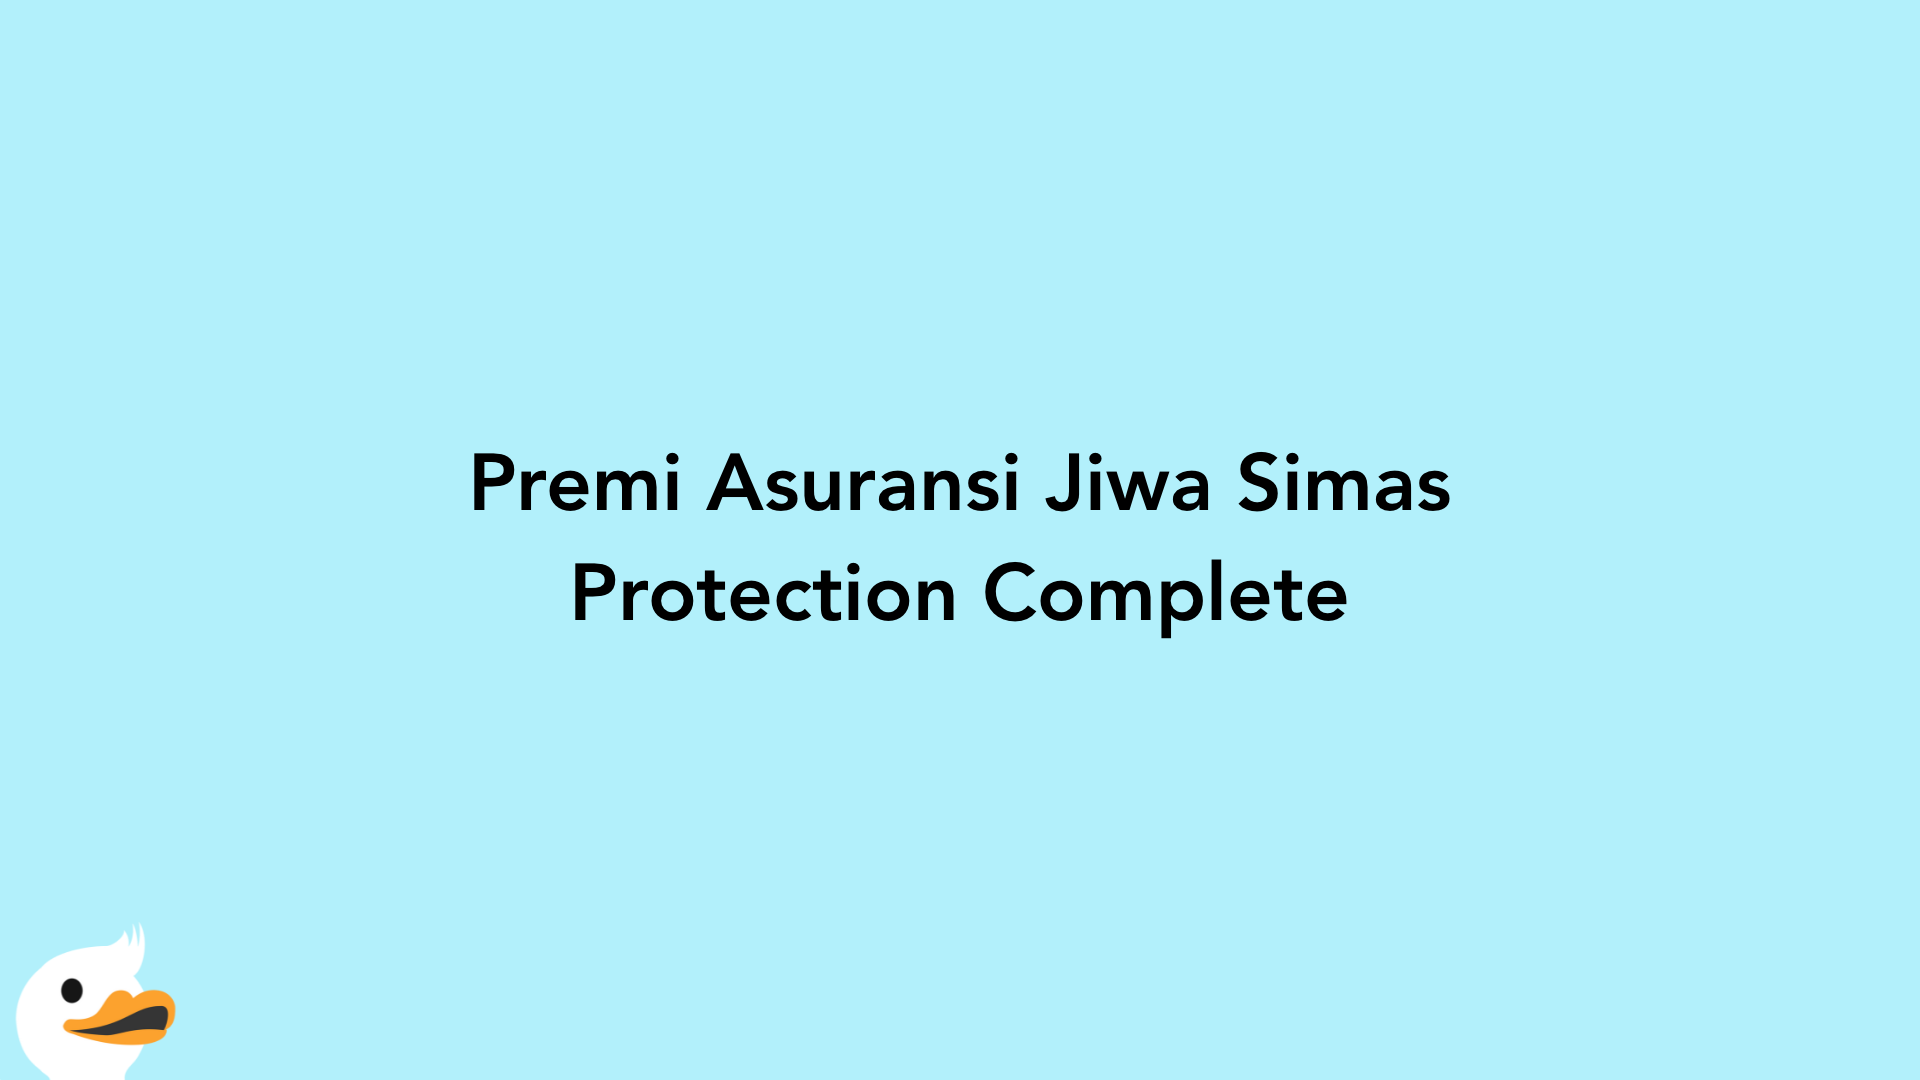 Premi Asuransi Jiwa Simas Protection Complete